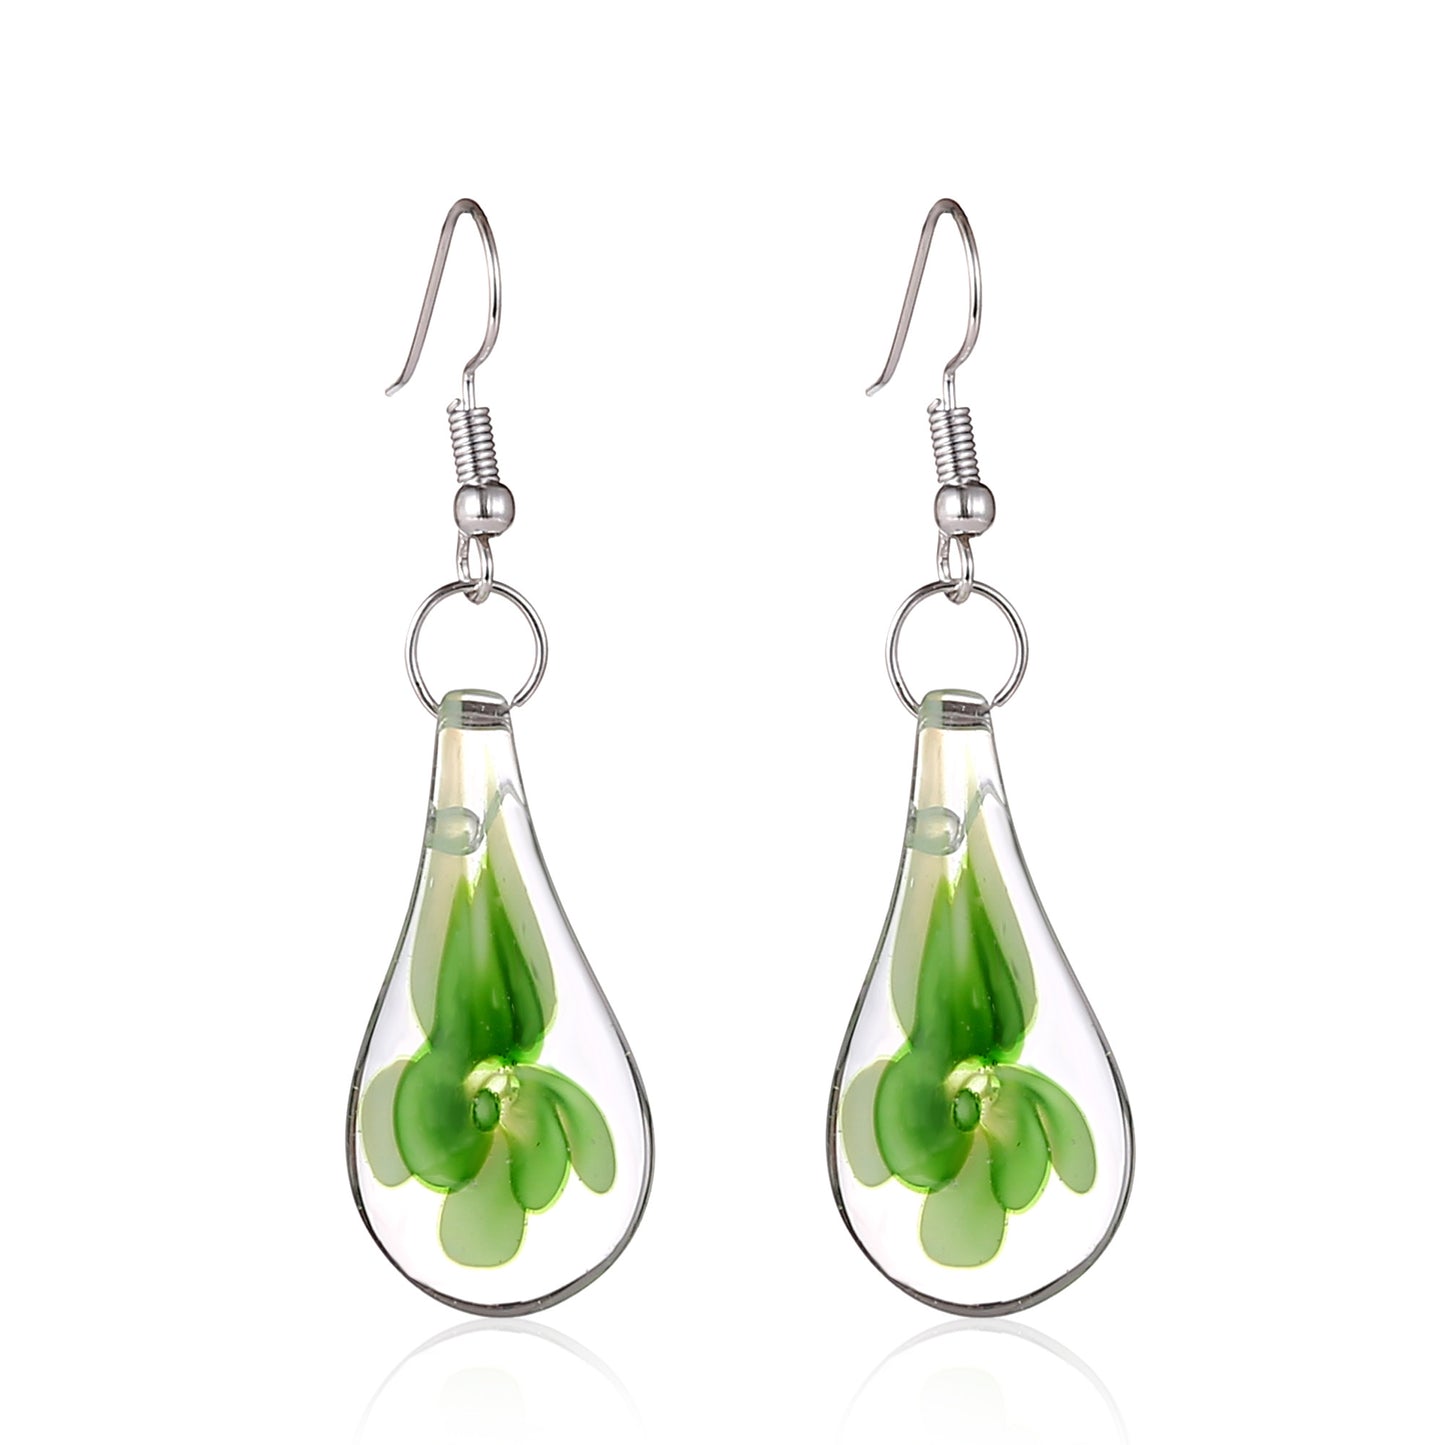 BESHEEK Murano-inspired Green and Clear Swirl Heart Glass Earrings | Handmade Hypoallergenic Boho Beach Gala Wedding Style Fashion Earrings